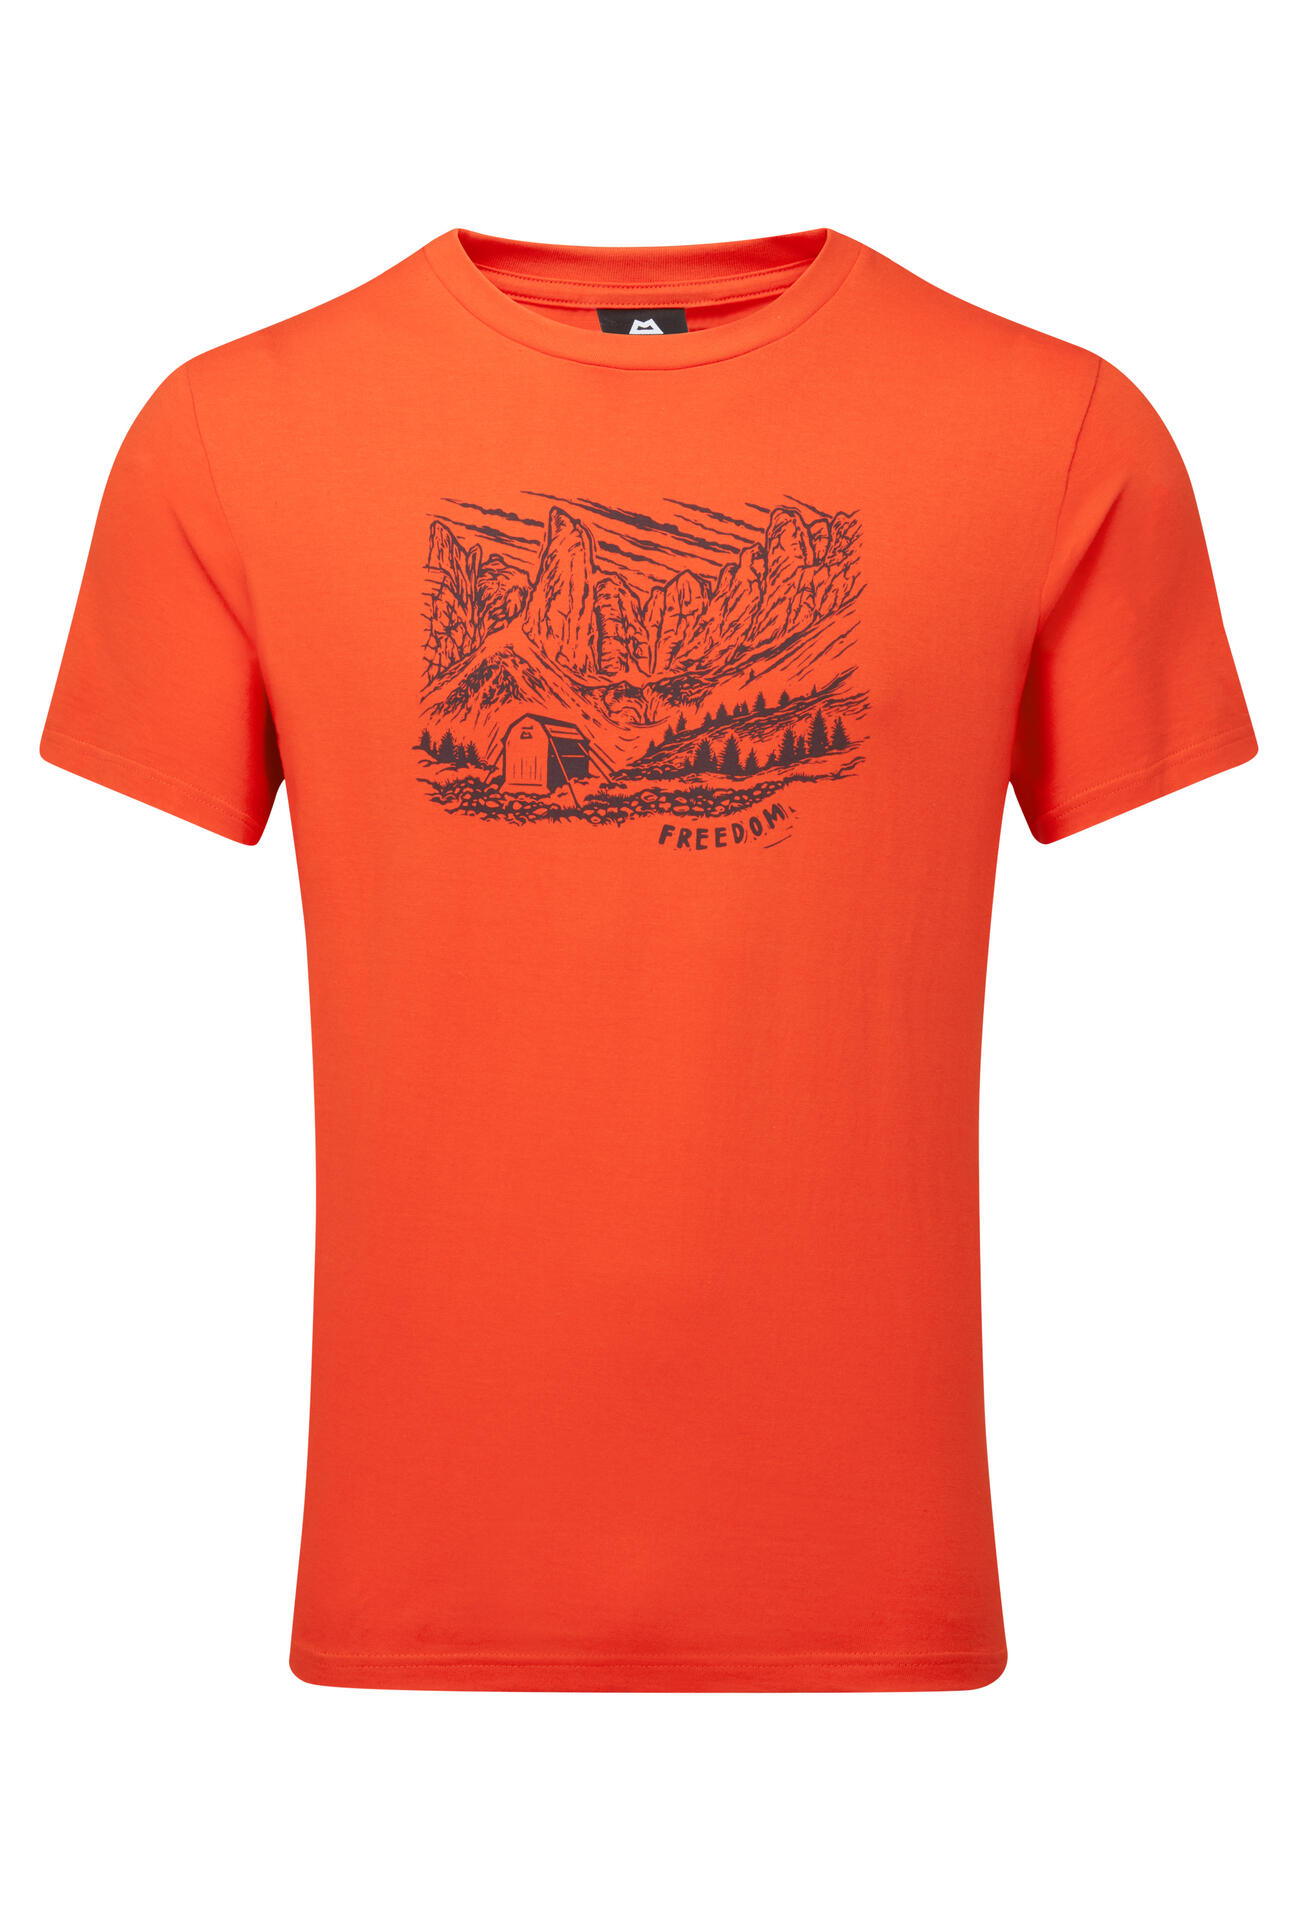 Mountain Equipment Freedom Tee Men'S Barva: Cardinal Orange, Velikost: L